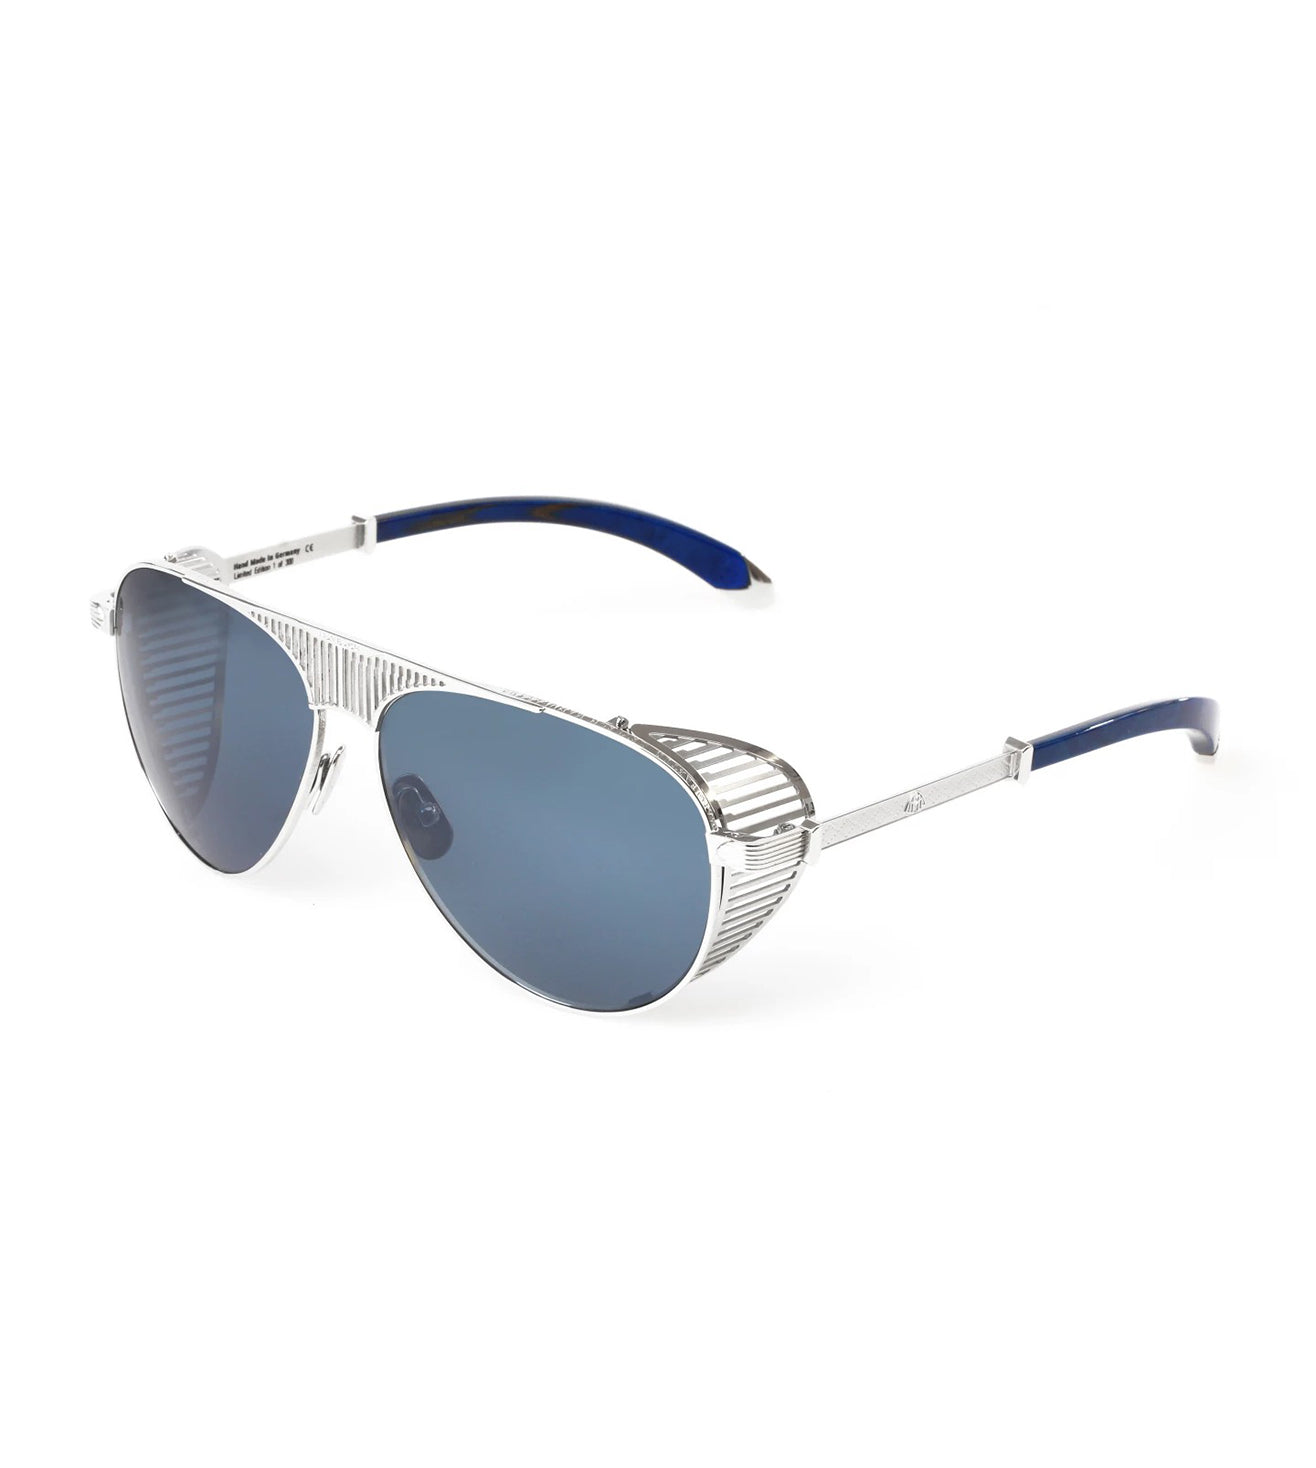 Maybach The Vision - I Men's Blue Aviator Sunglasses